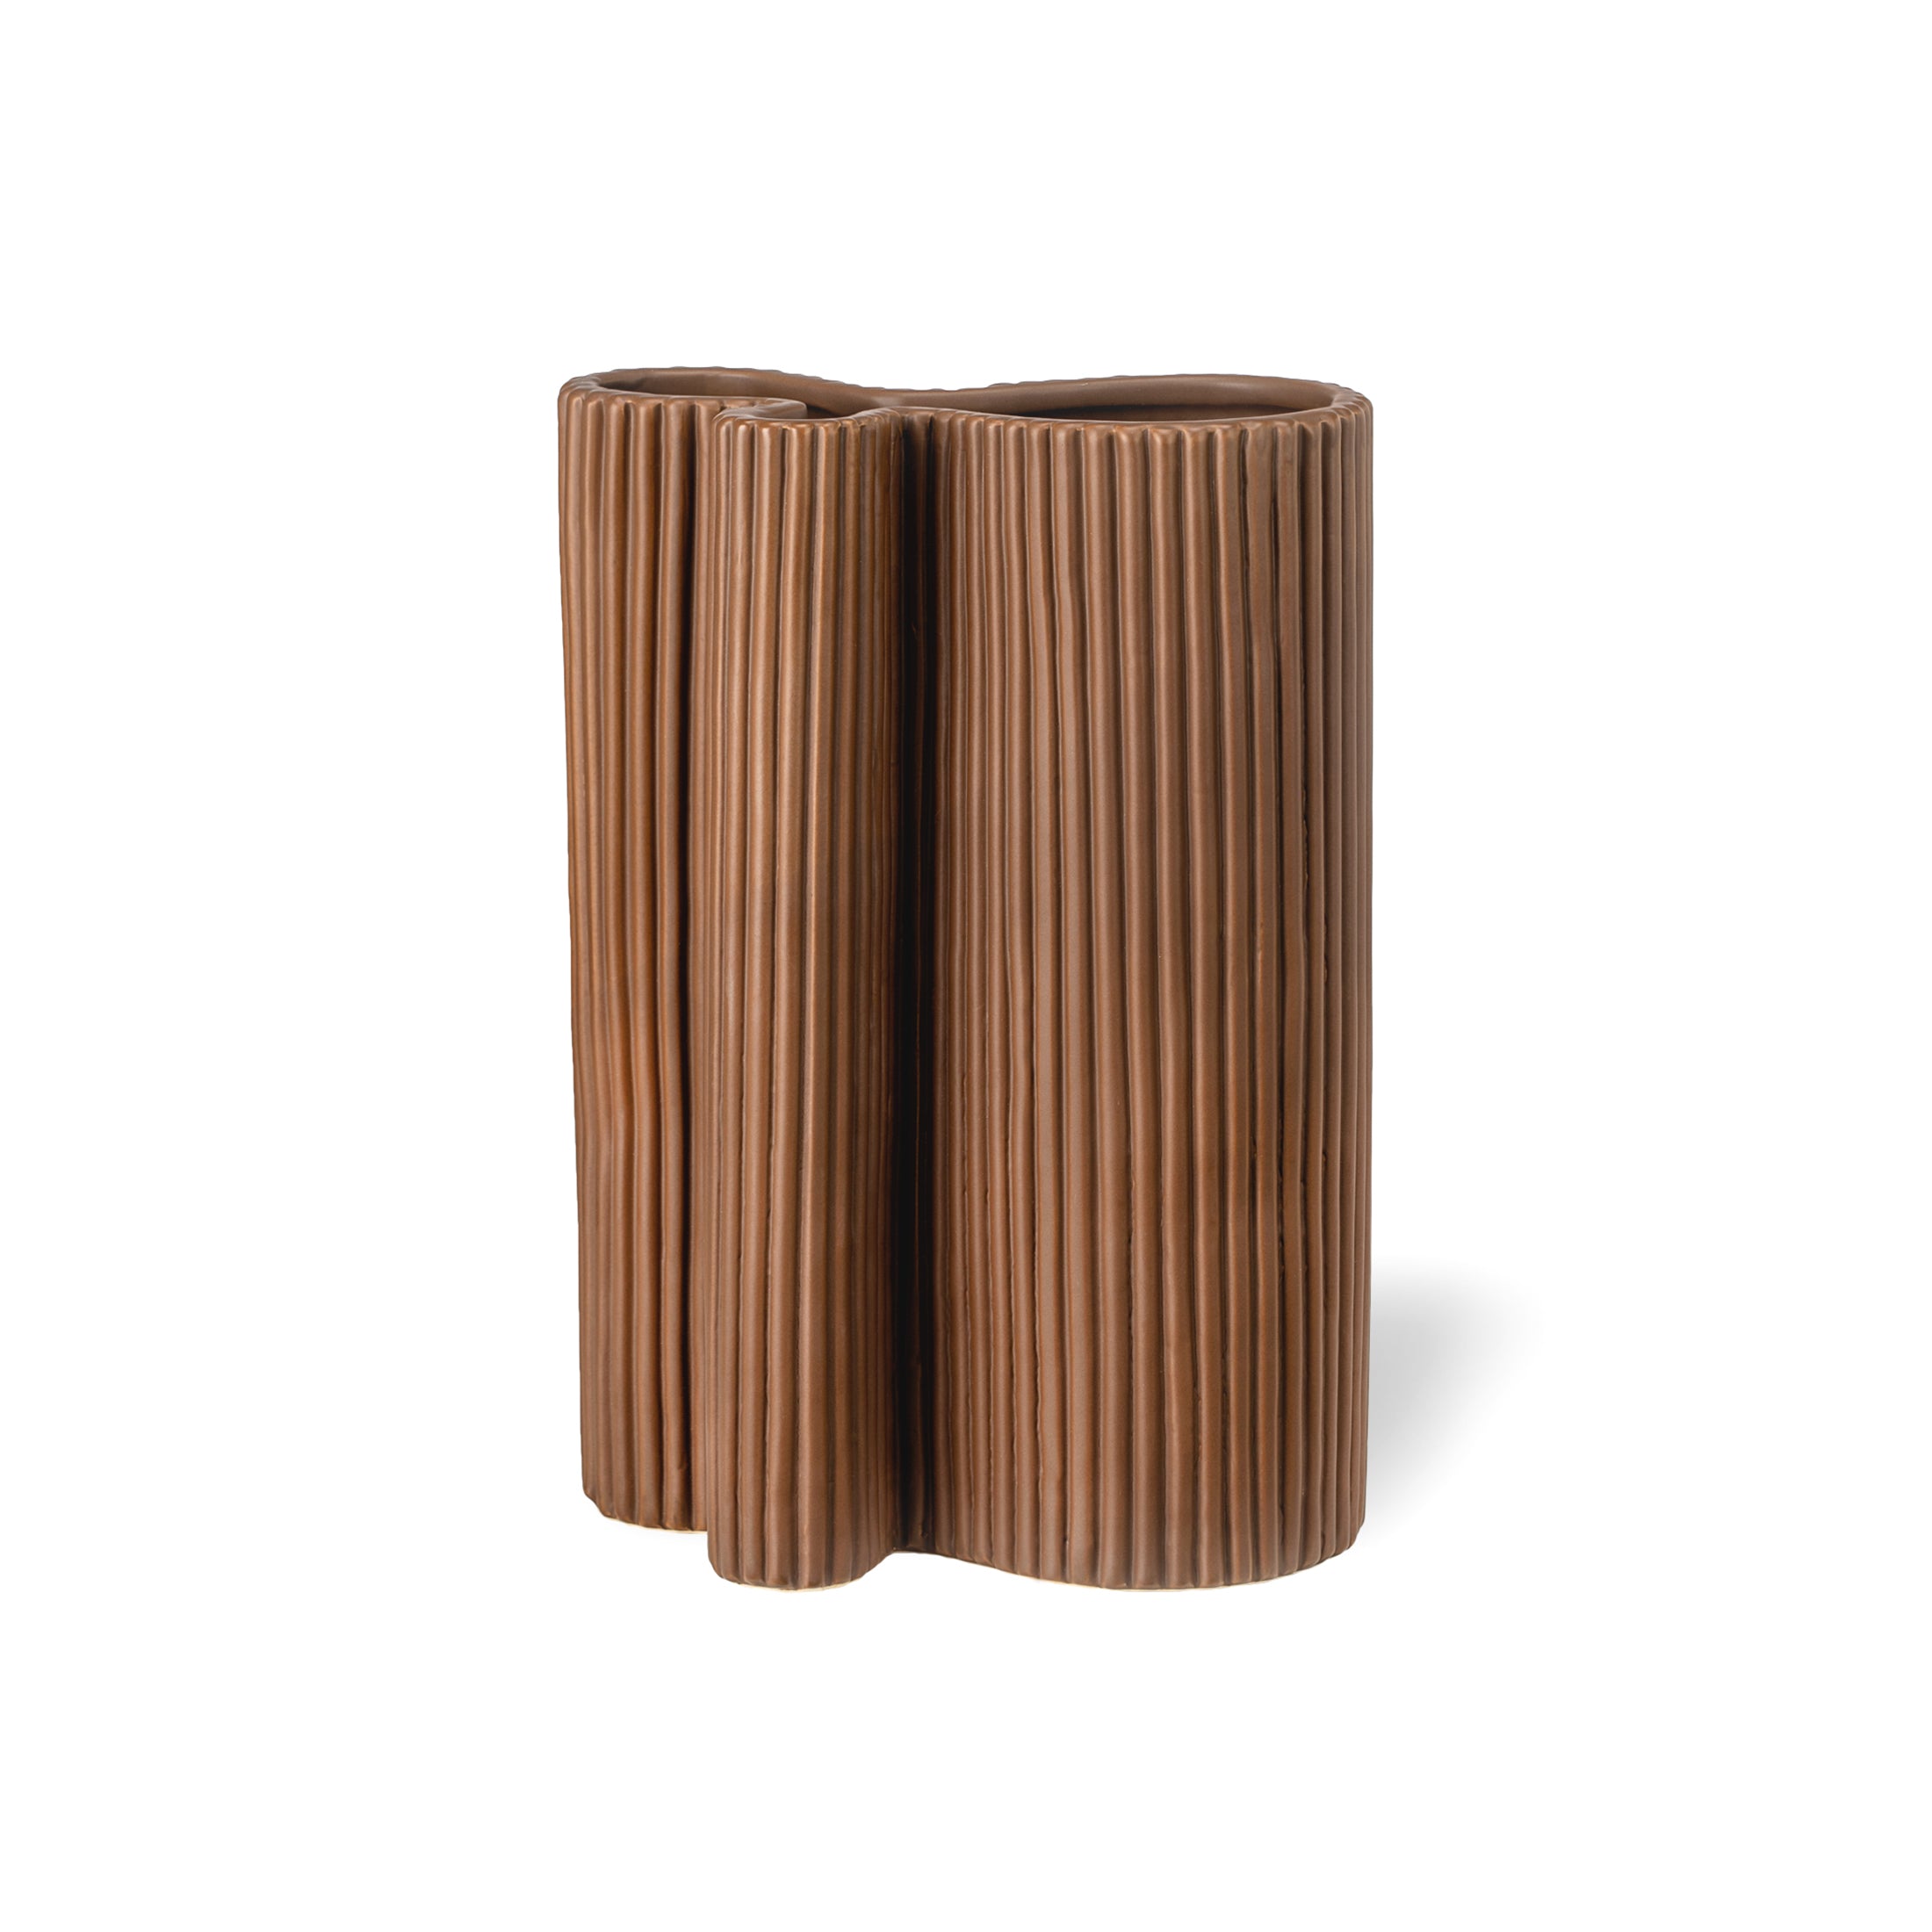 Herring & Bones - Concept Store Joyeux - Stences - Vase - Vase "Wrap"